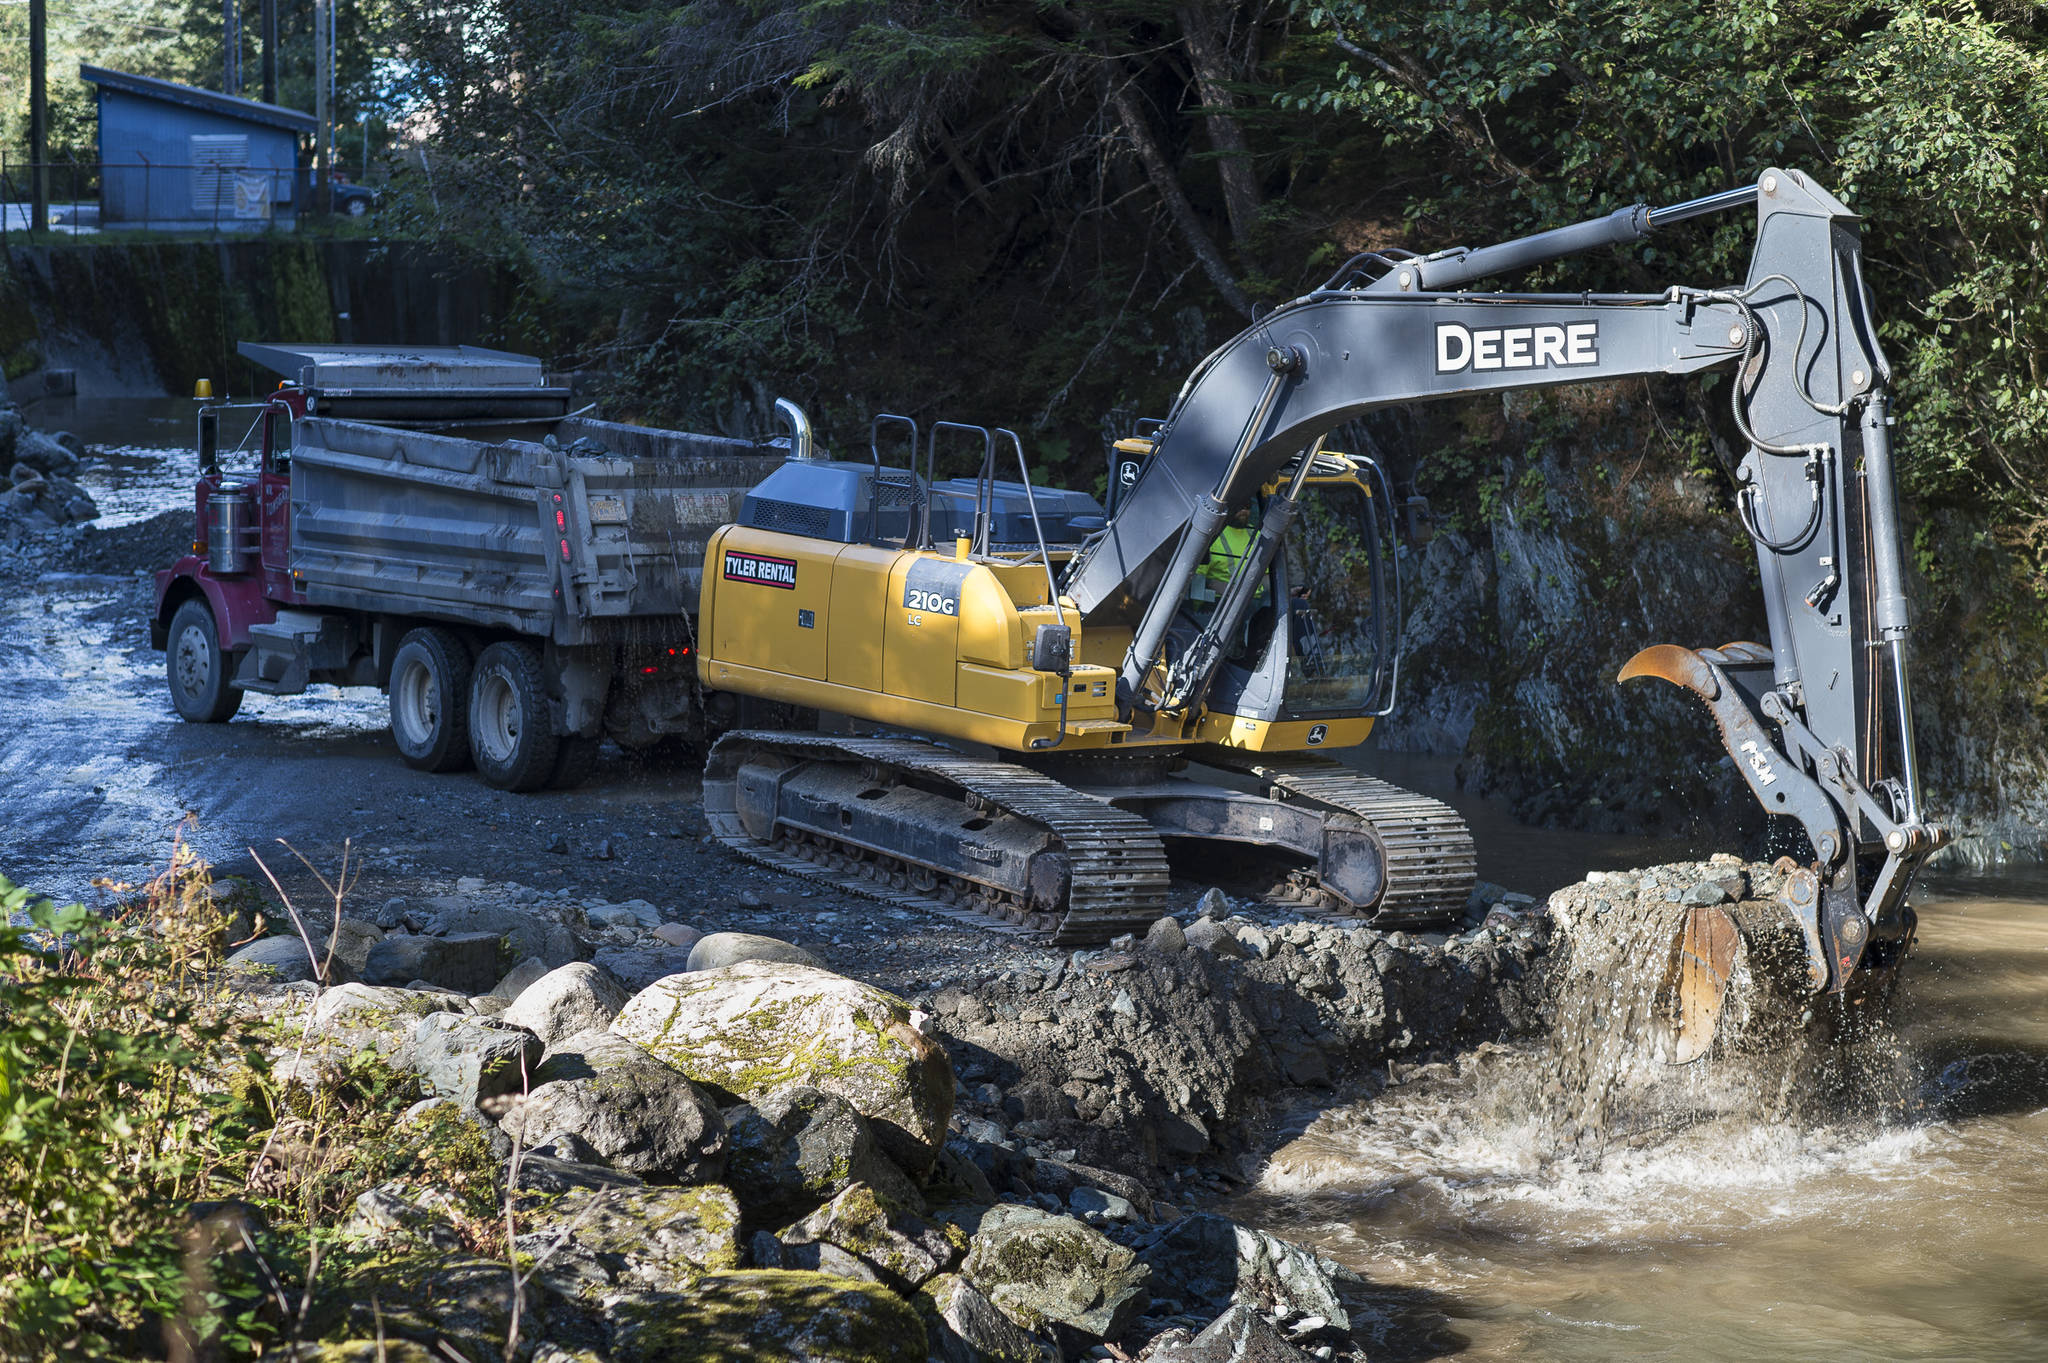 An excavator dredges Gold Creek at Cope Park on Wednesday, Sept. 12, 2018. (Michael Penn | Juneau Empire)